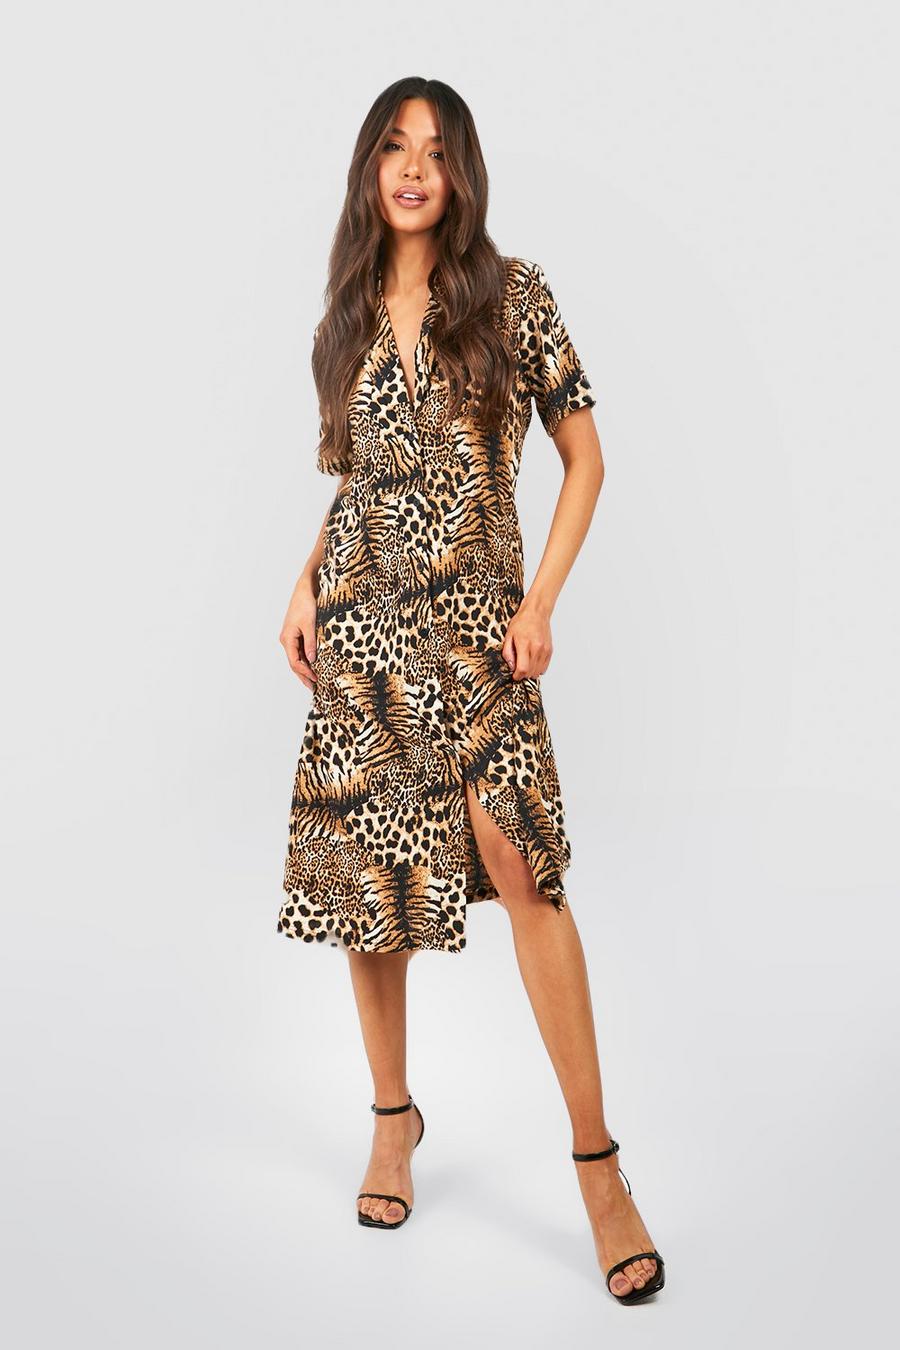 Women's Tiger And Leopard Mix Shirt Style Midi Dress | Boohoo UK